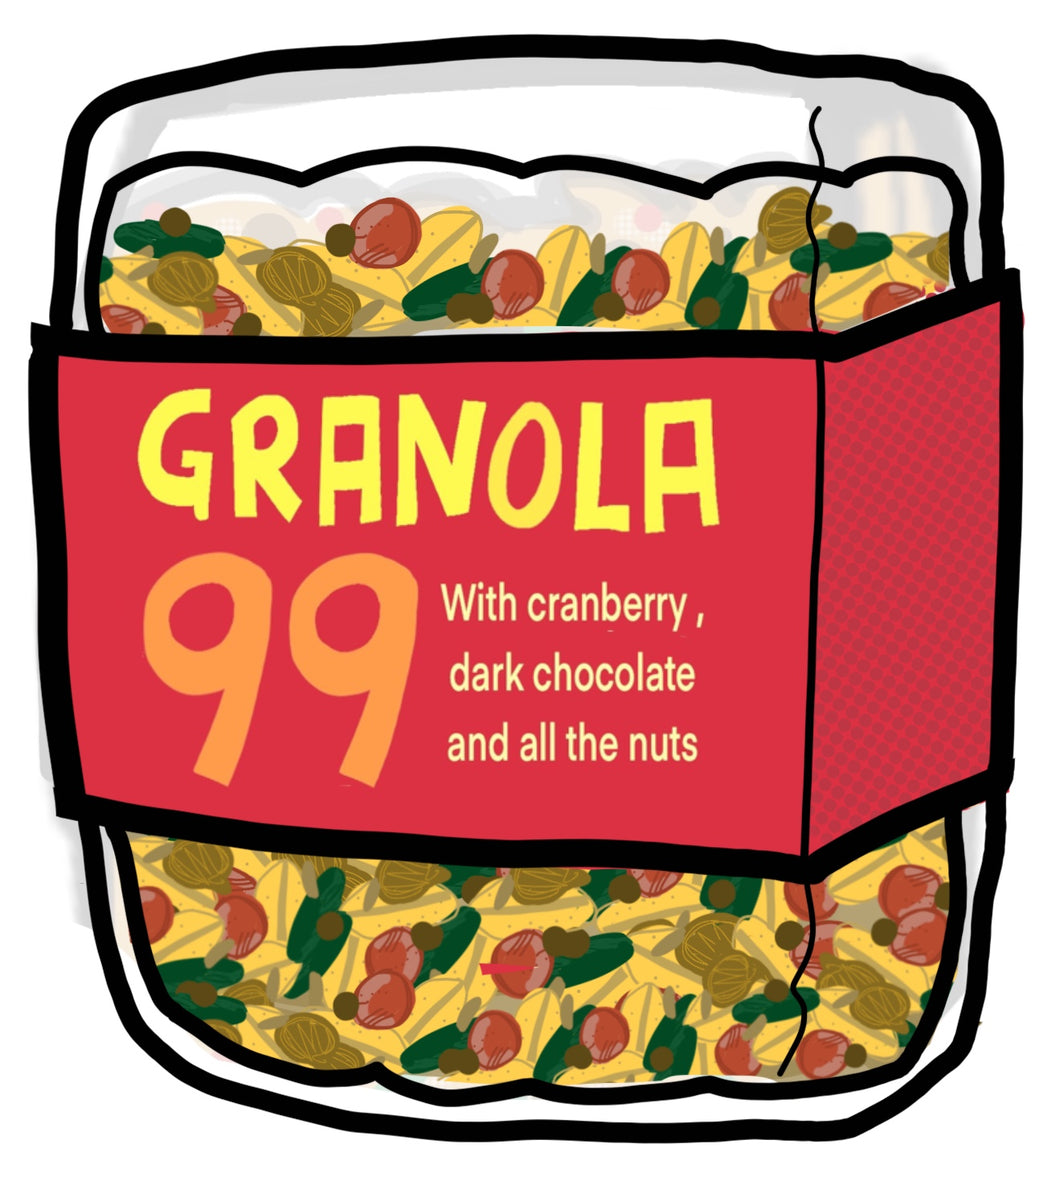 Granola 99